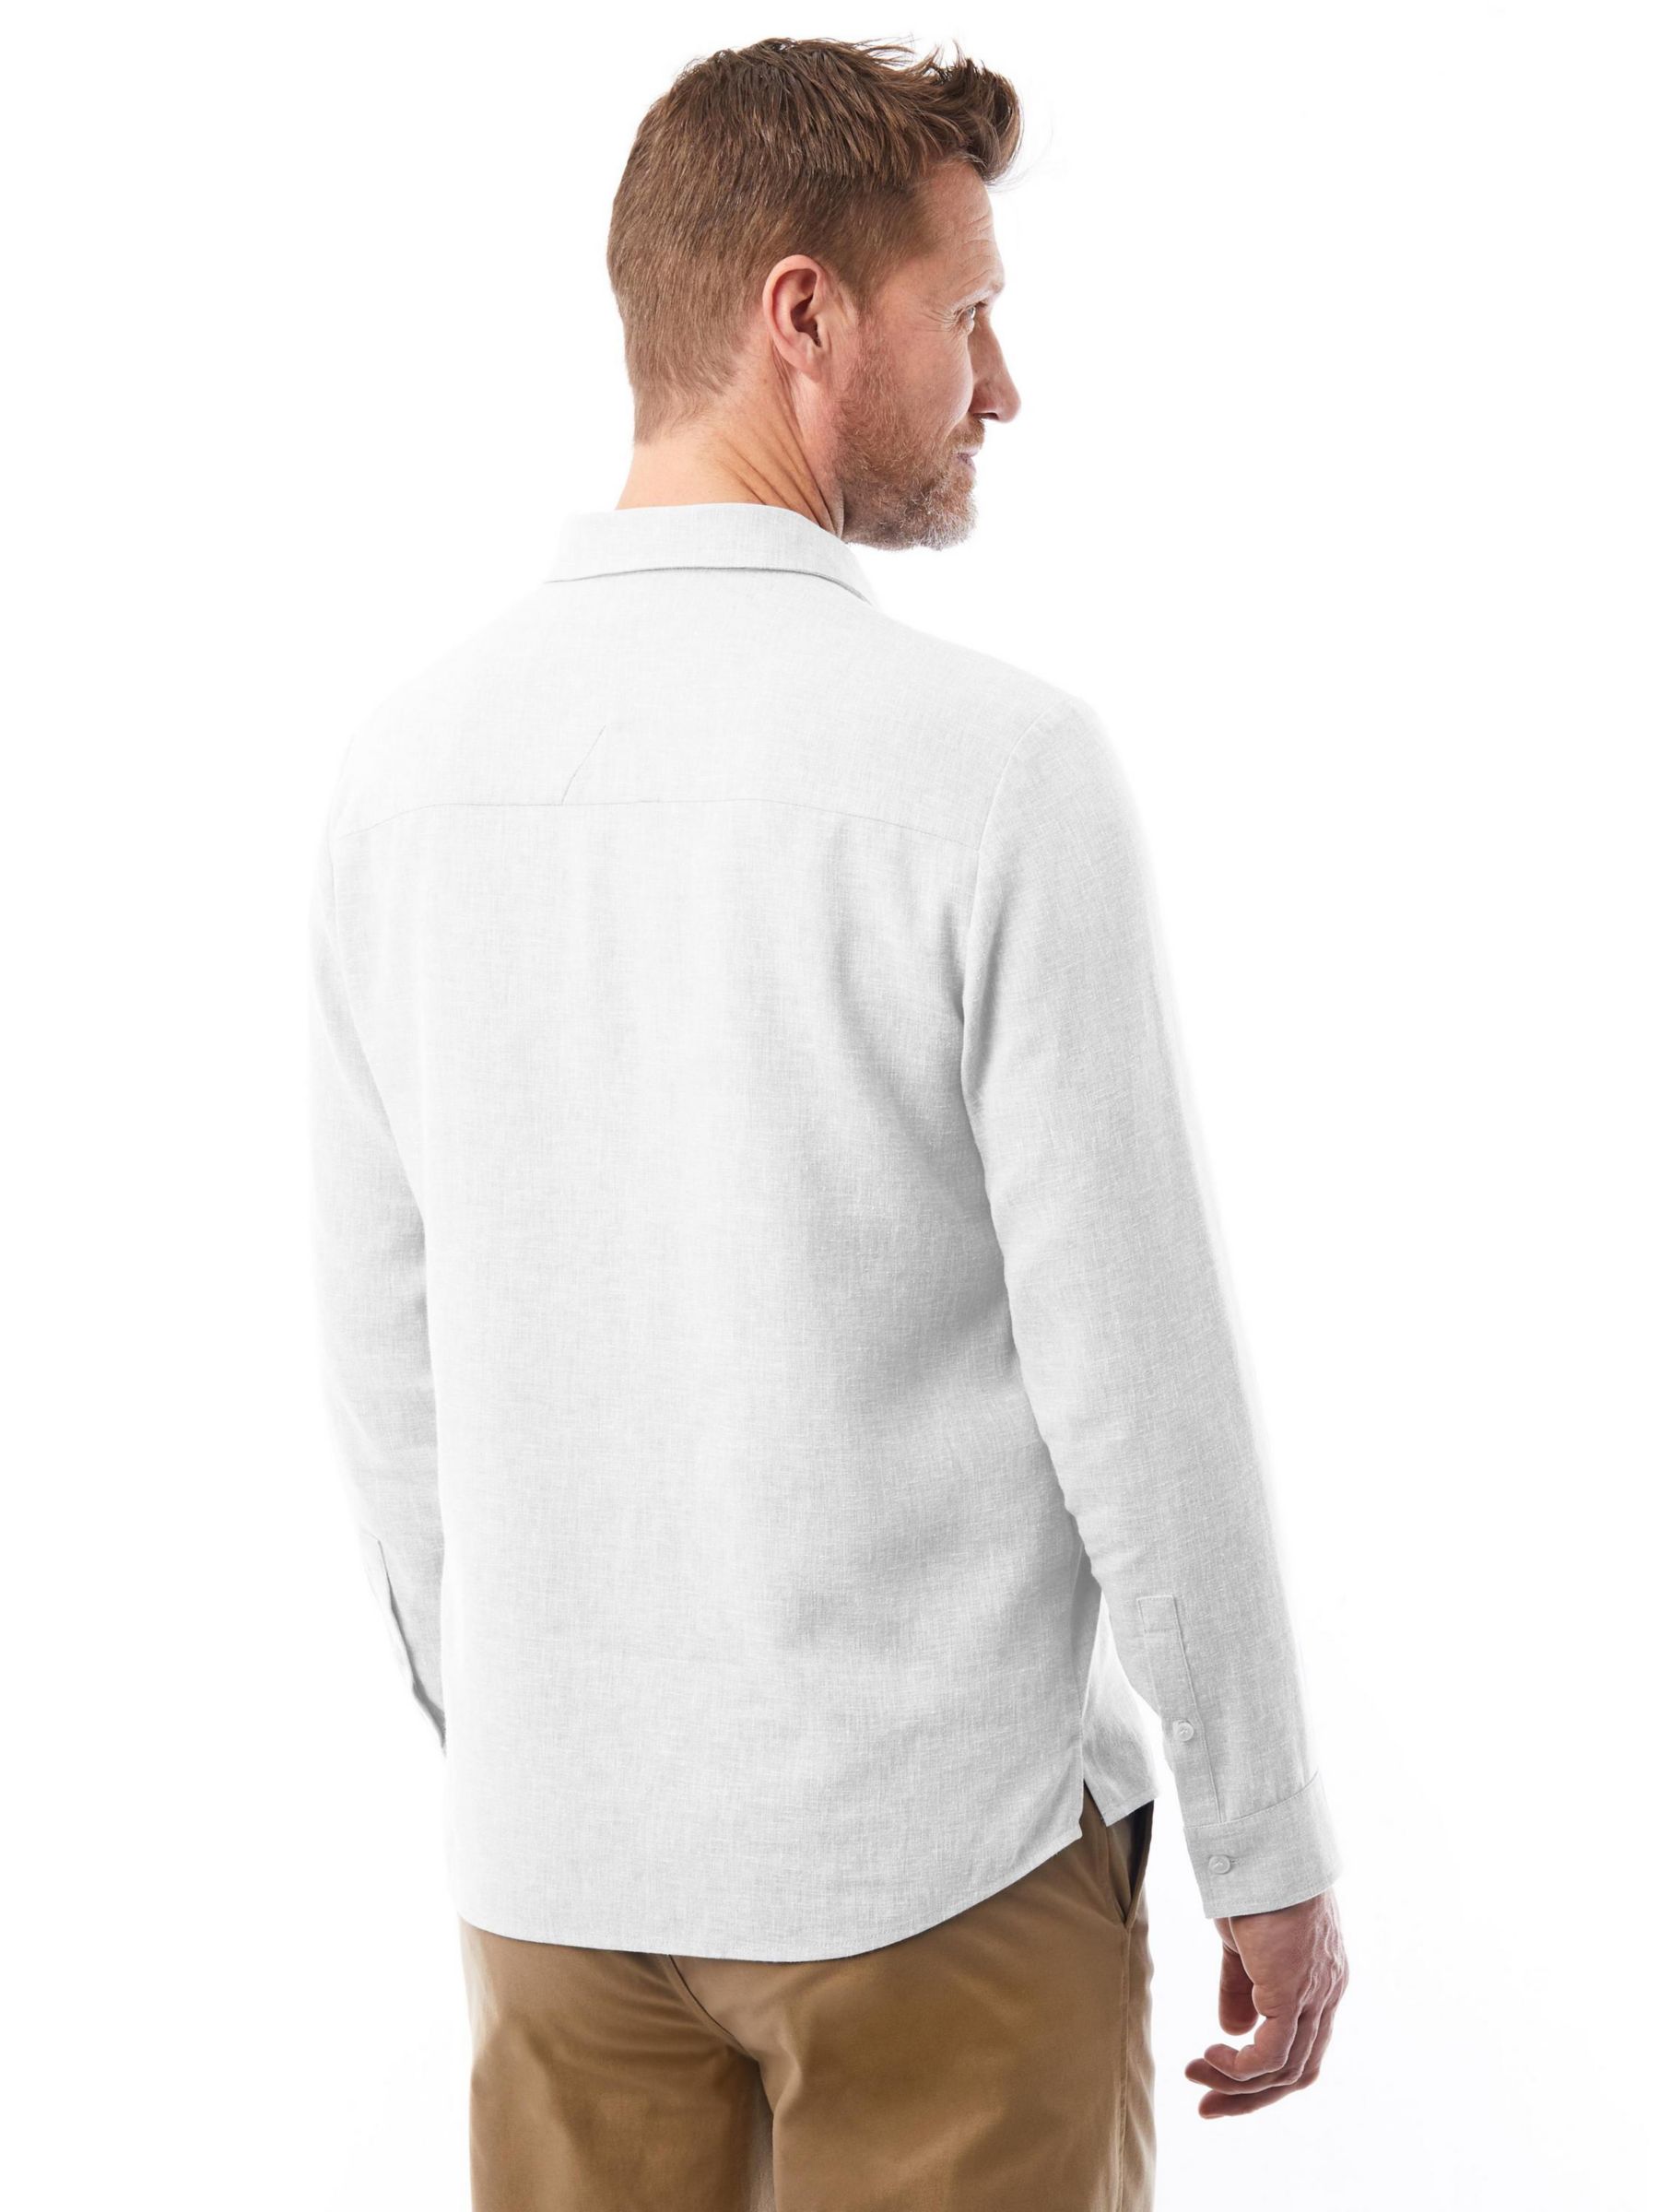 Rohan Porto Linen Long Sleeve Shirt, White, S